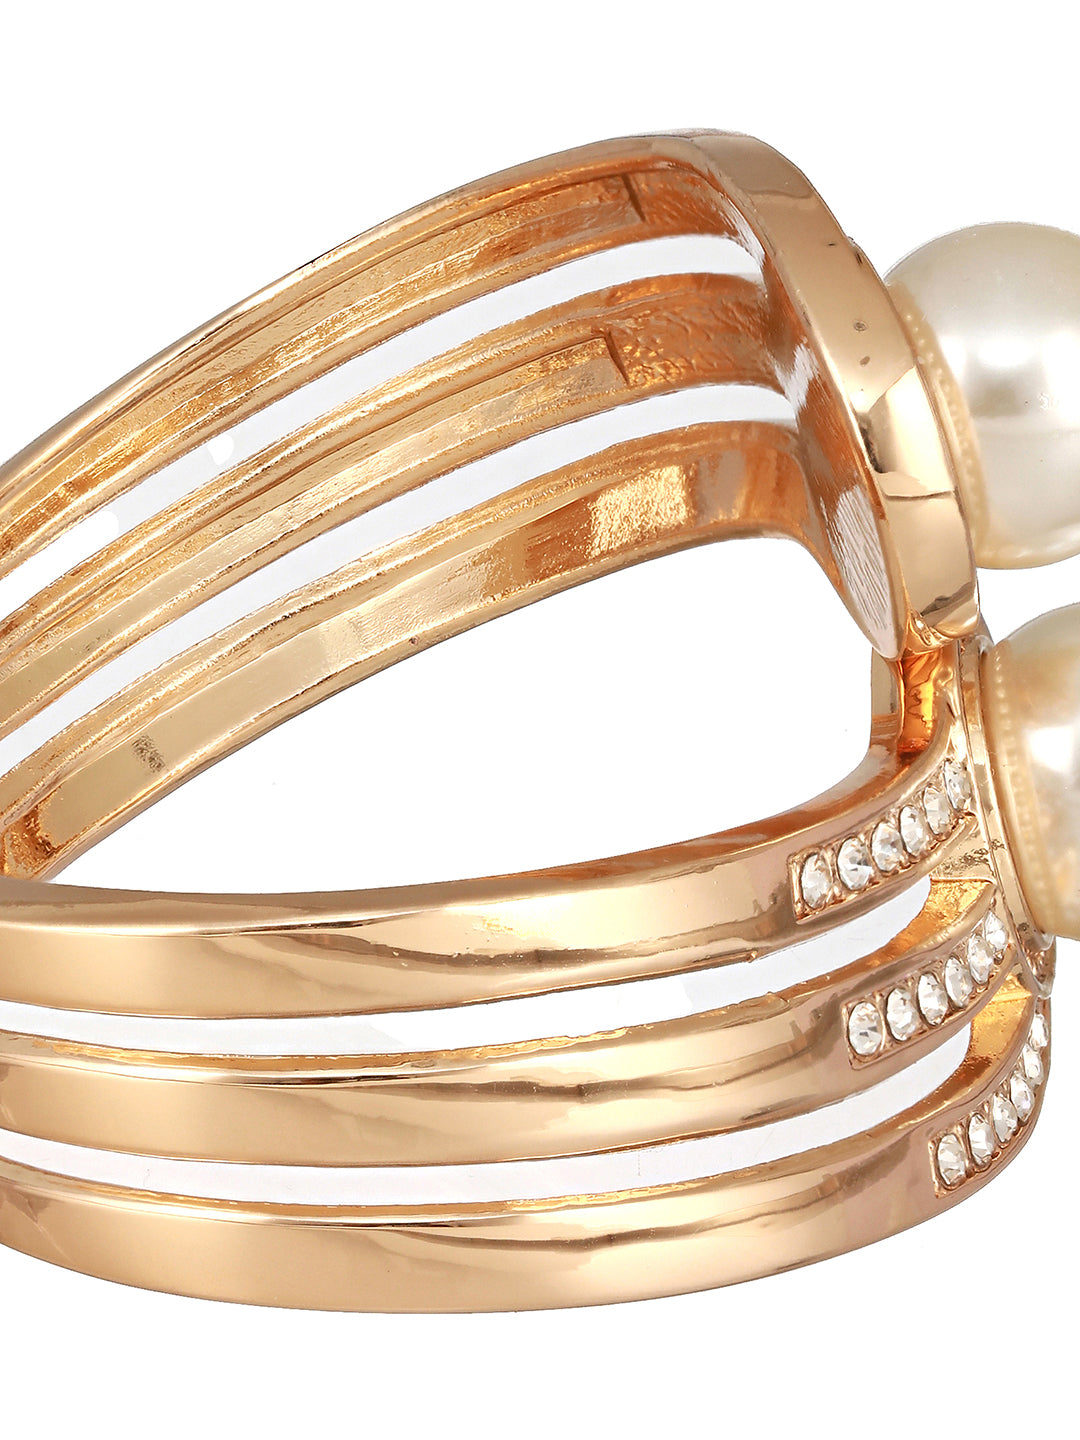 JAZZ AND SIZZLE Gold-Plated CZ Studded White Pearls Cuff Bracelet - Jazzandsizzle